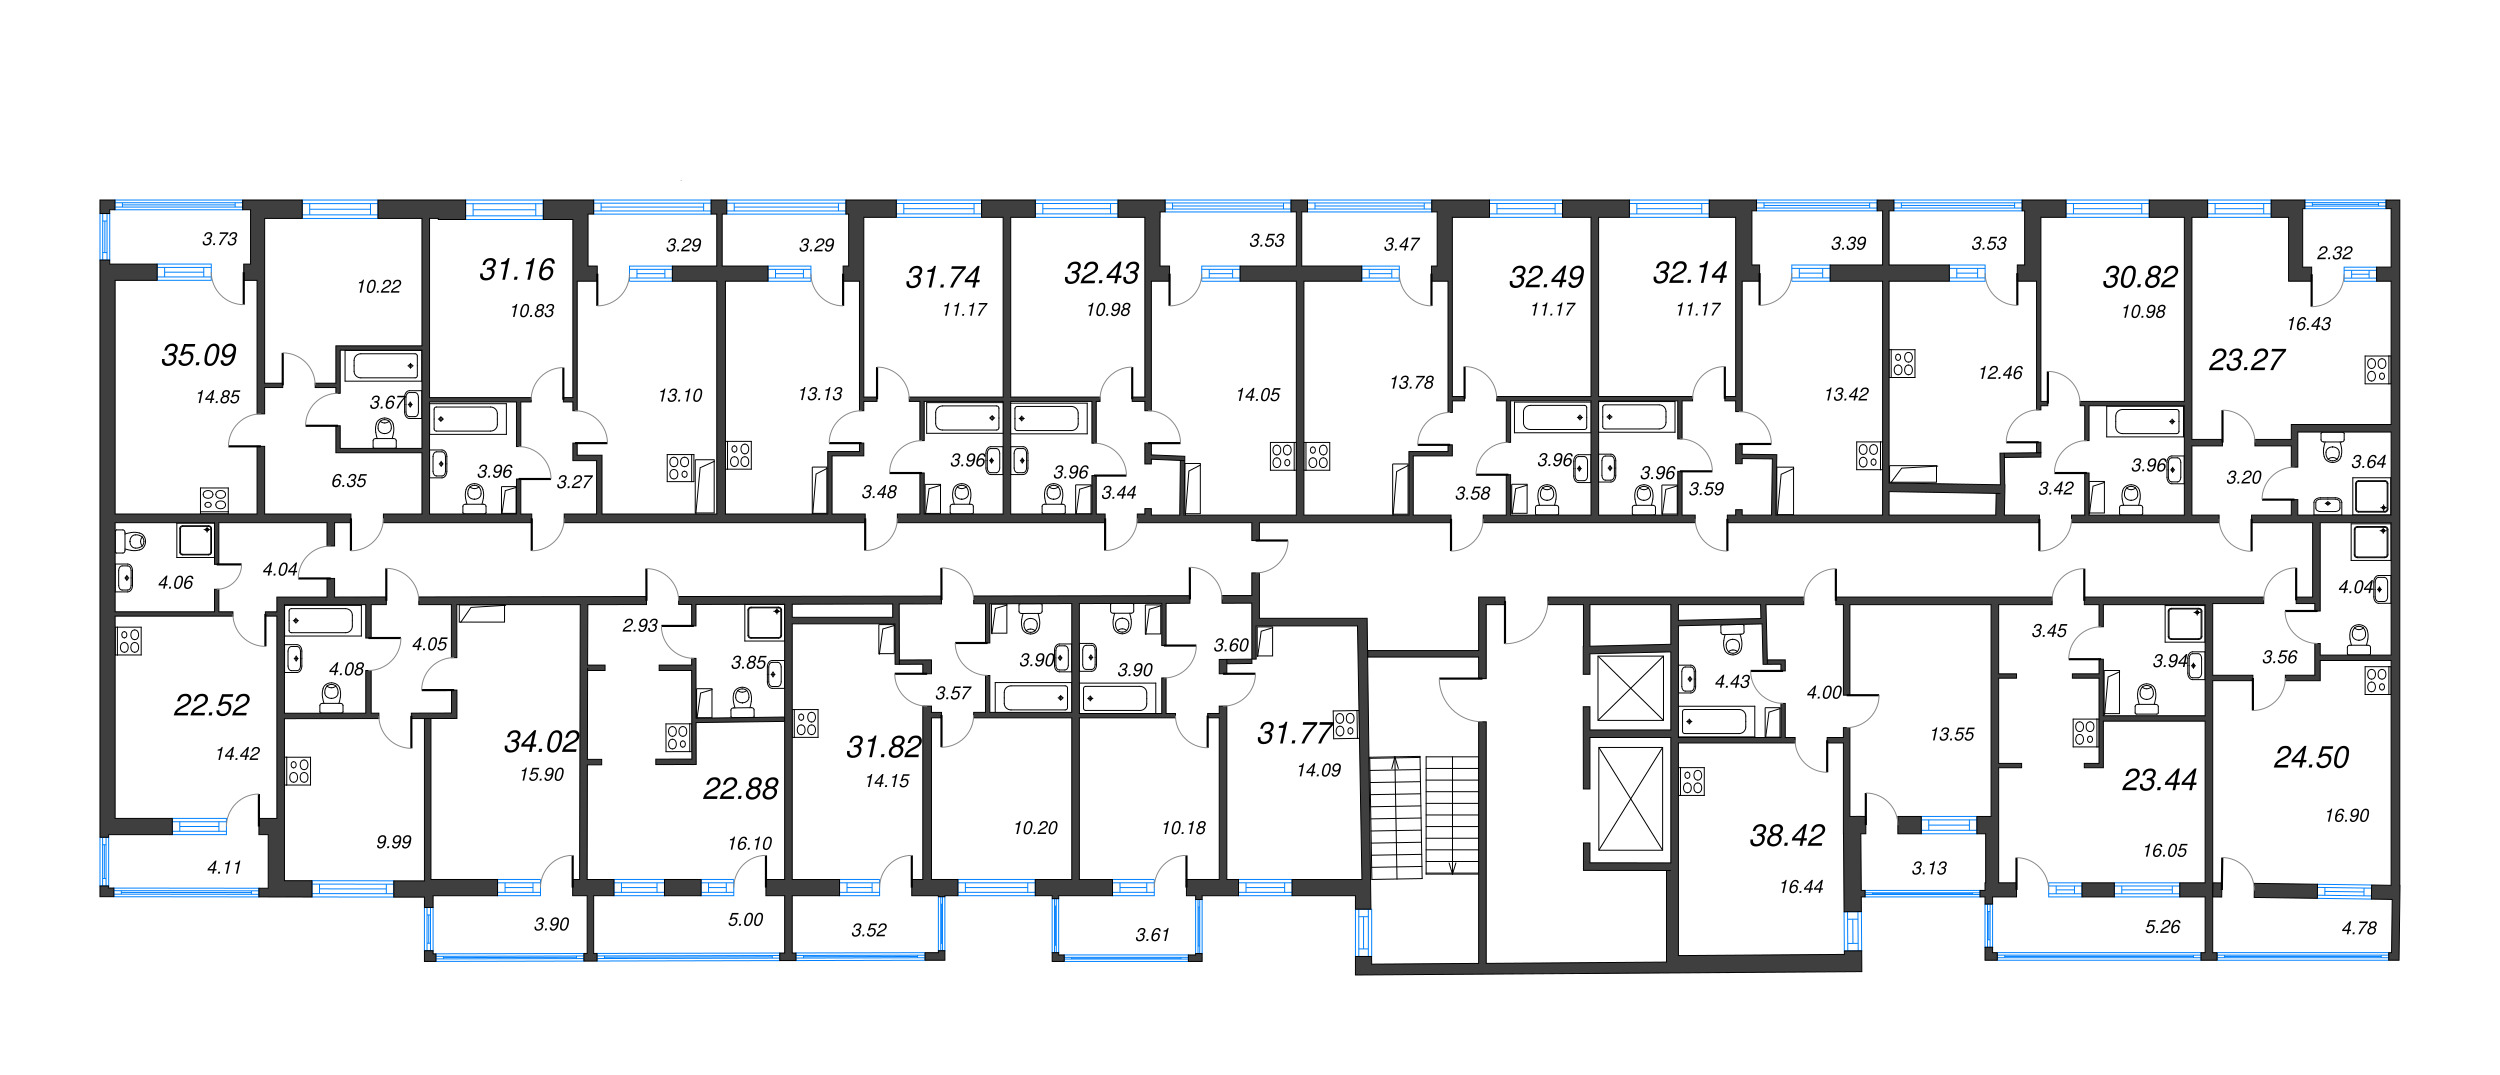 2-комнатная (Евро) квартира, 38.42 м² - планировка этажа